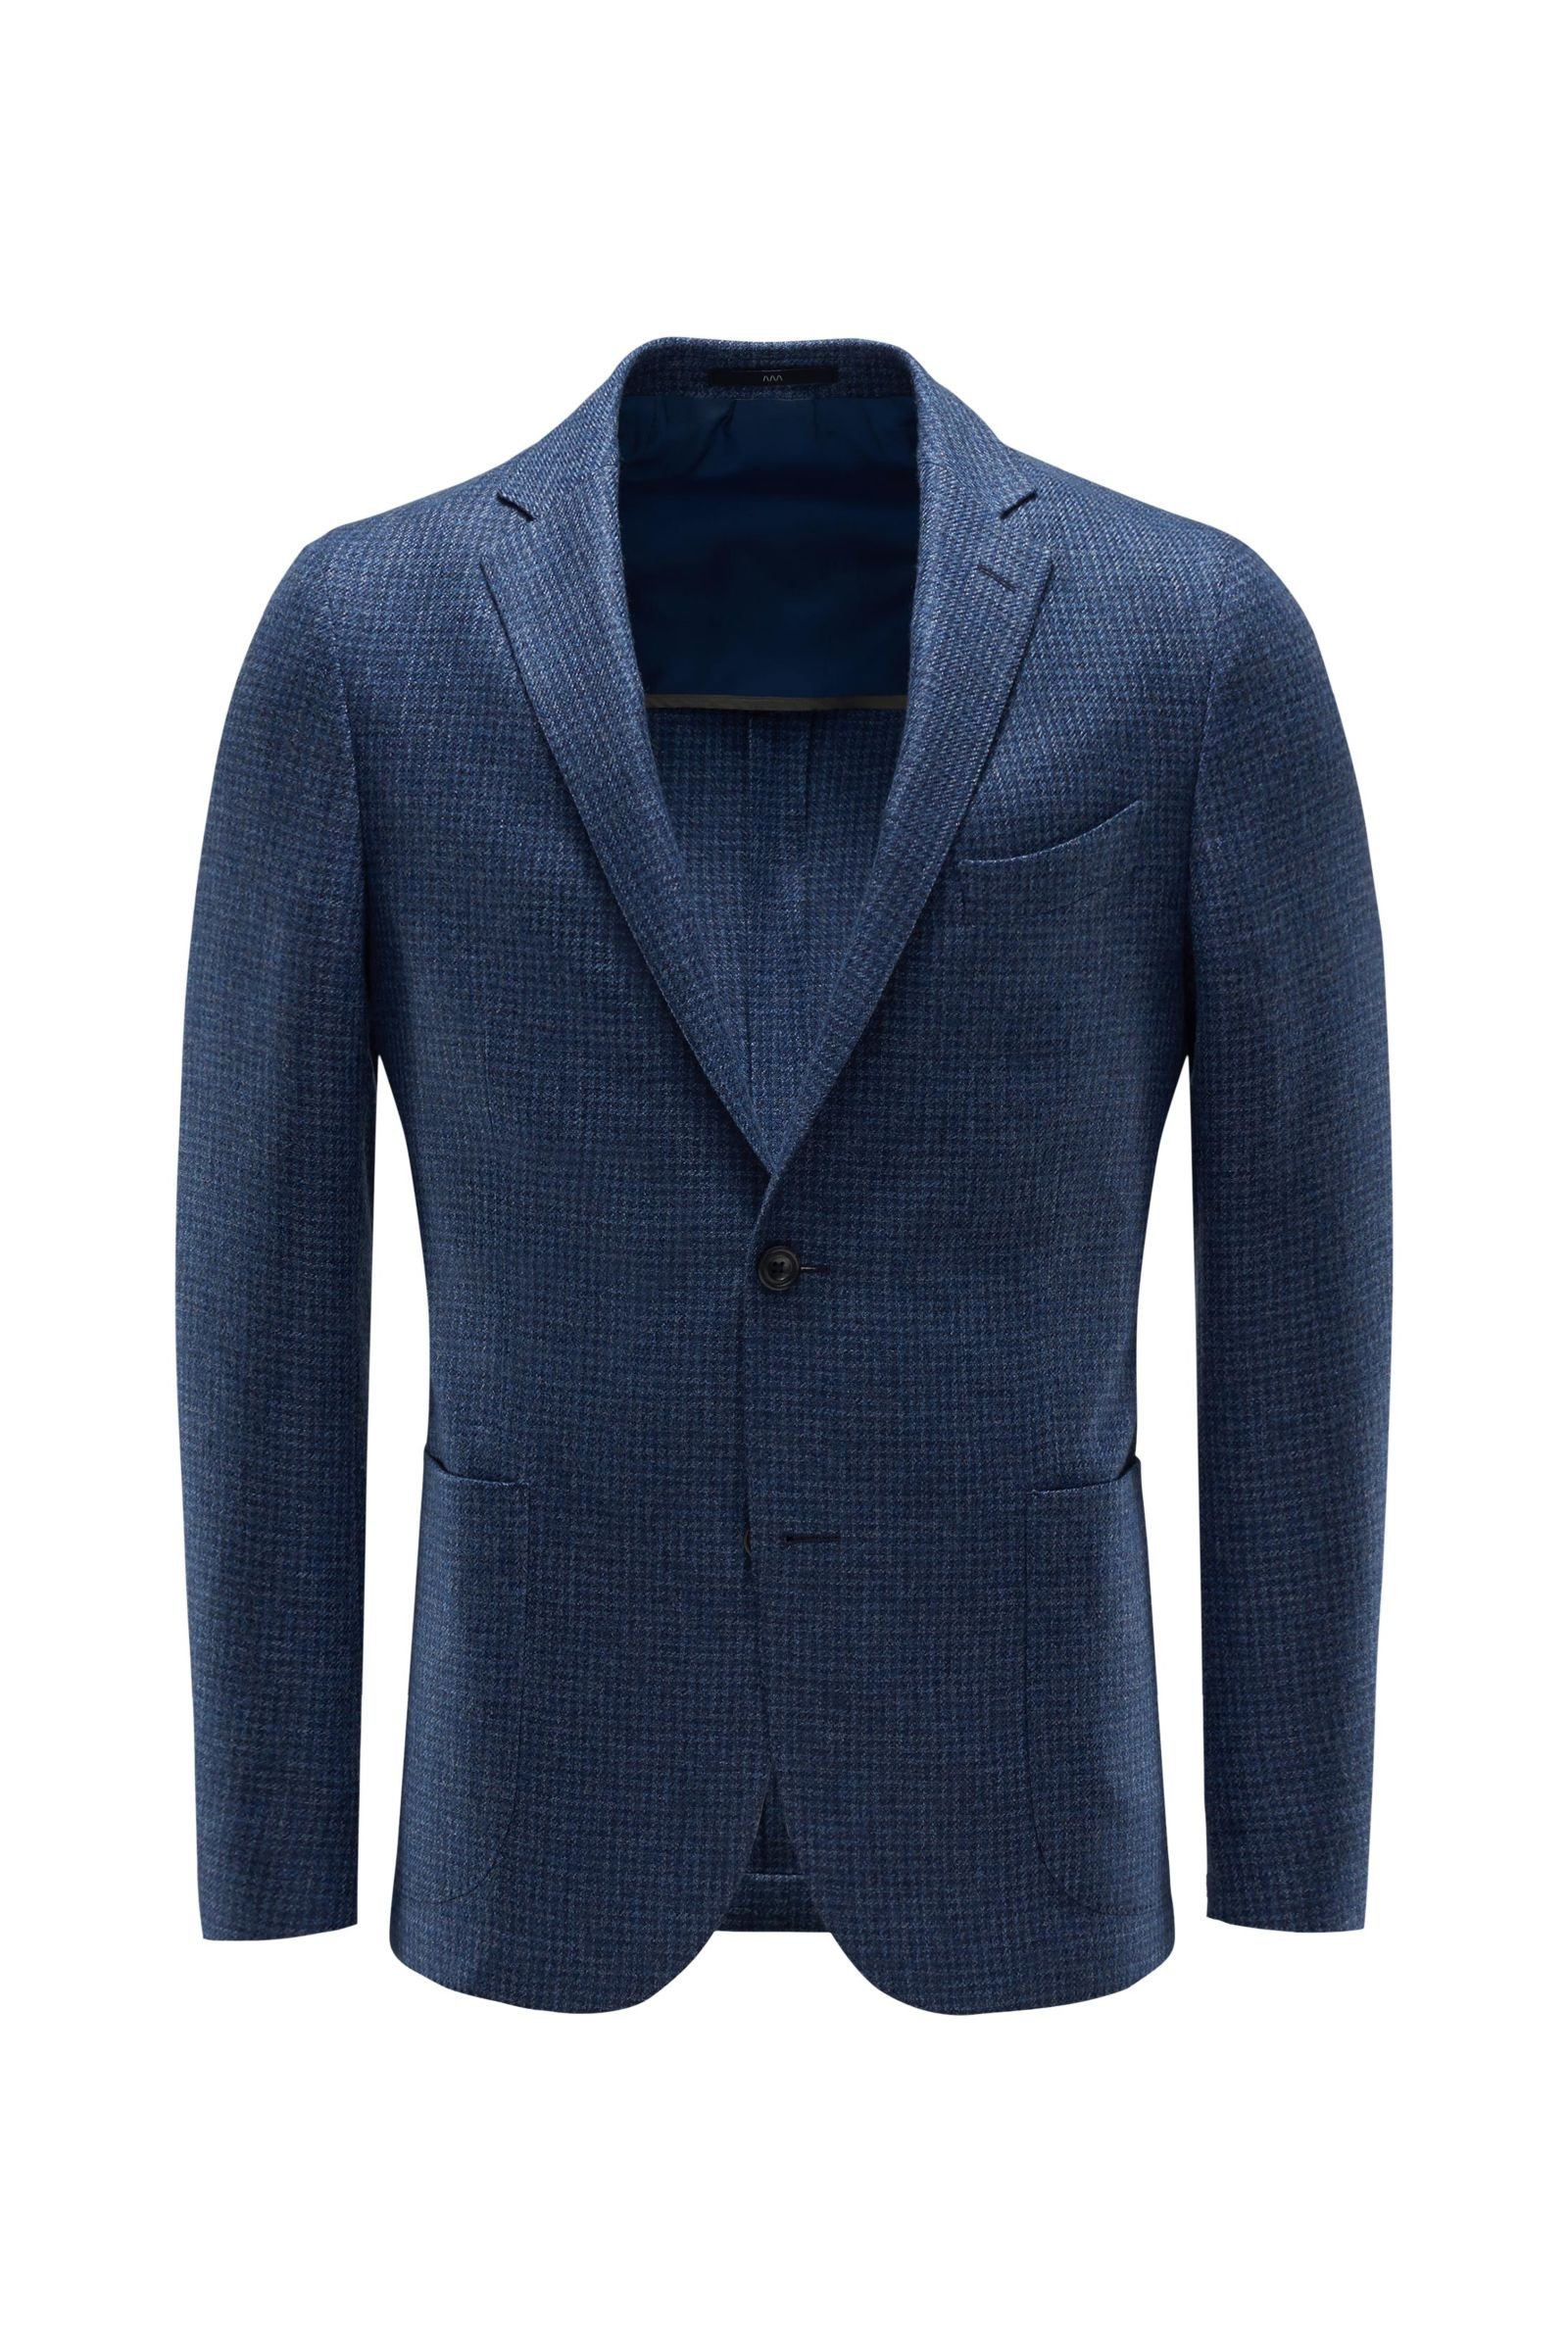 Cashmere smart-casual jacket 'Sawyer' smoky blue checked